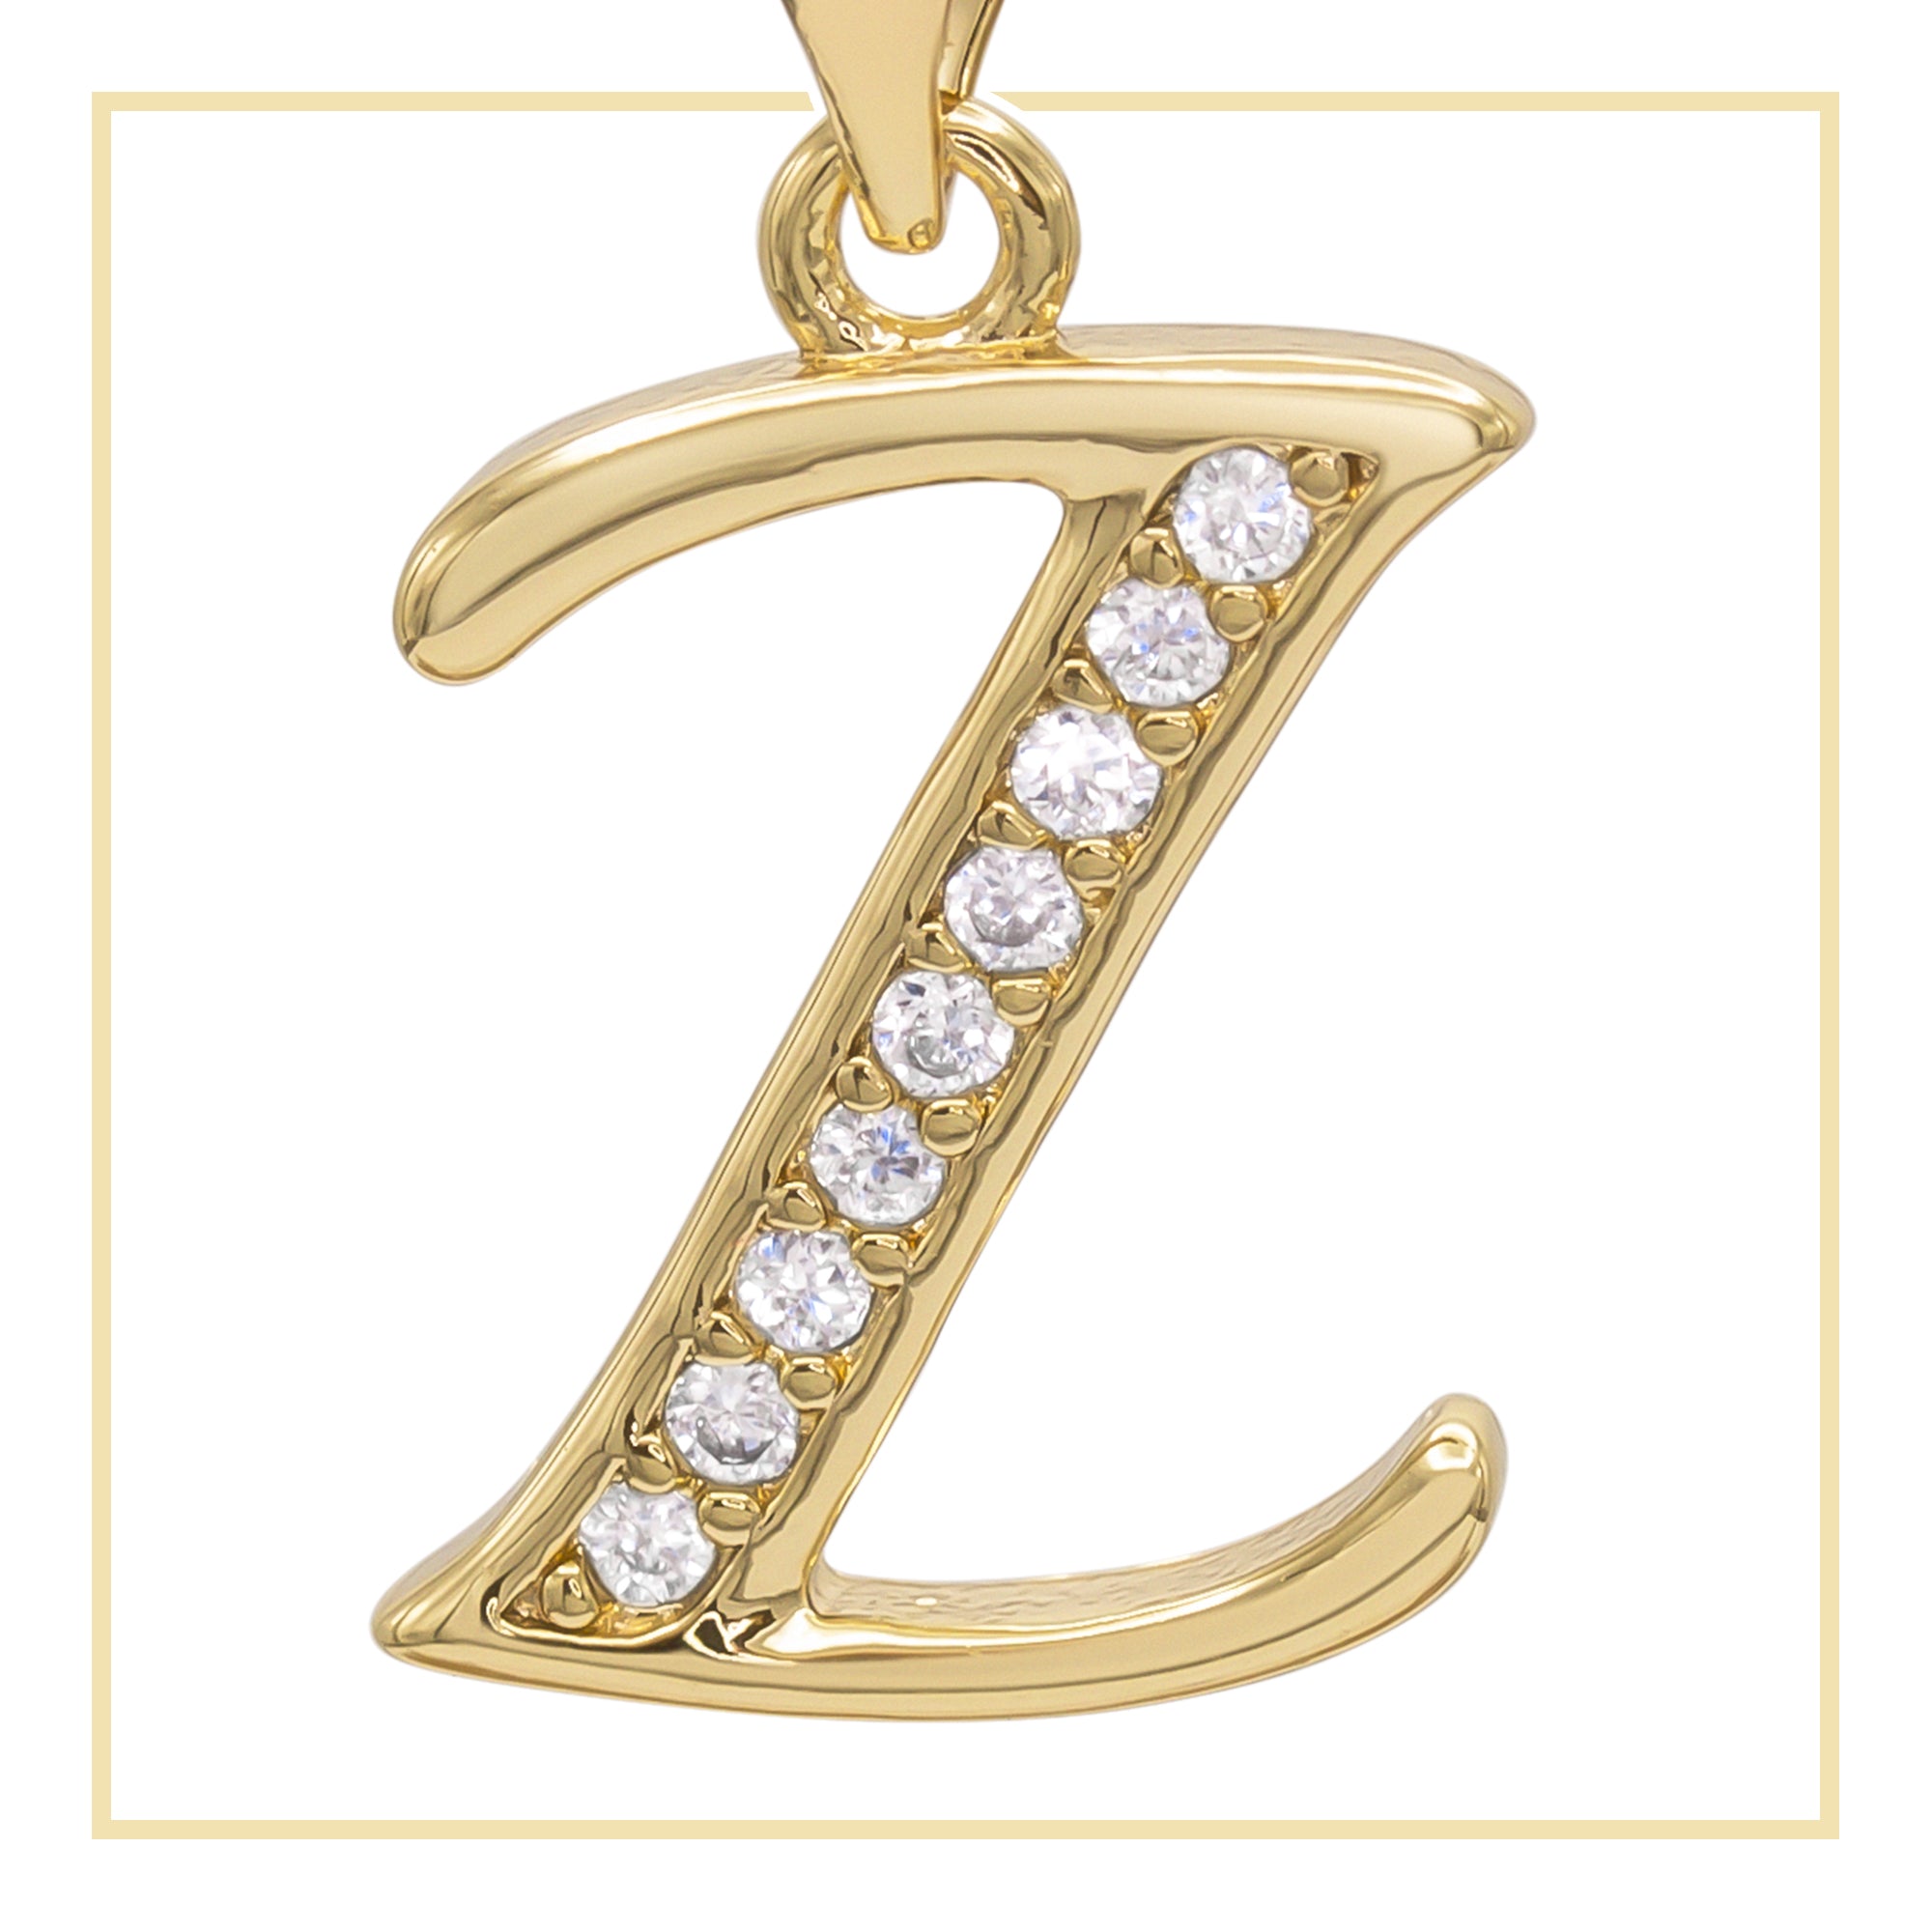 Z Letter Initial 14K Gold Filled Letter Pendant